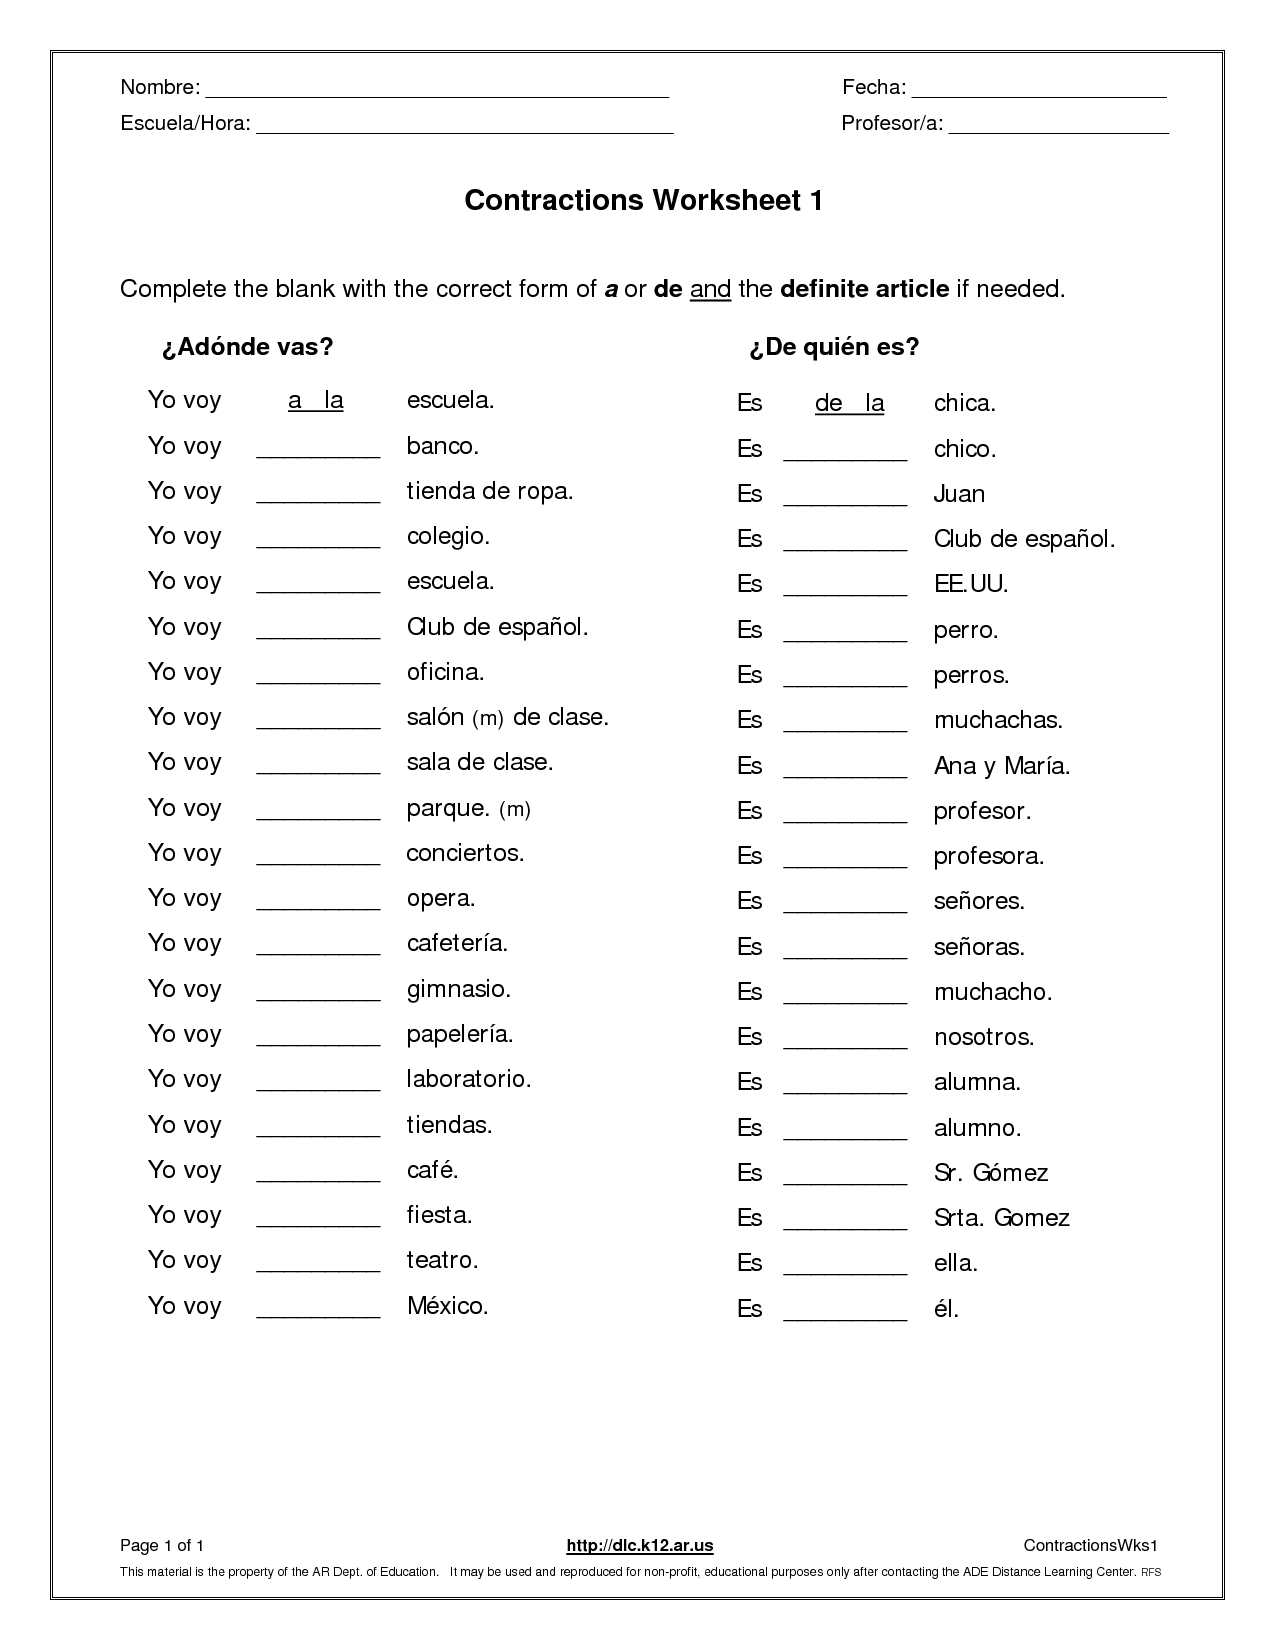 contractions-worksheet-2-english-treasure-trove